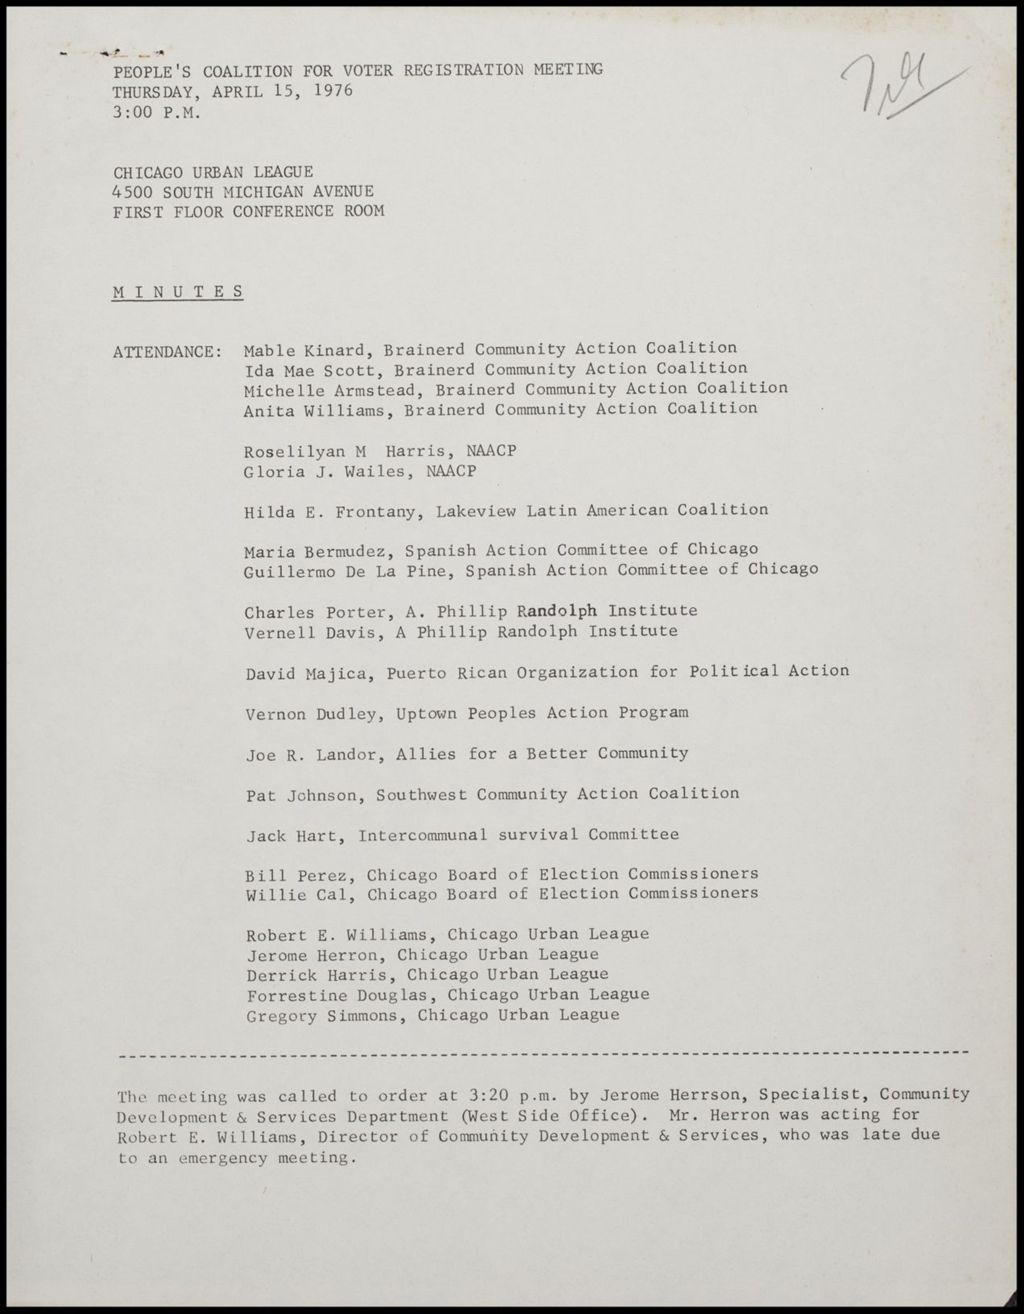 Miniature of Miscellaneous Documents, 1976 (Folder II-2137)